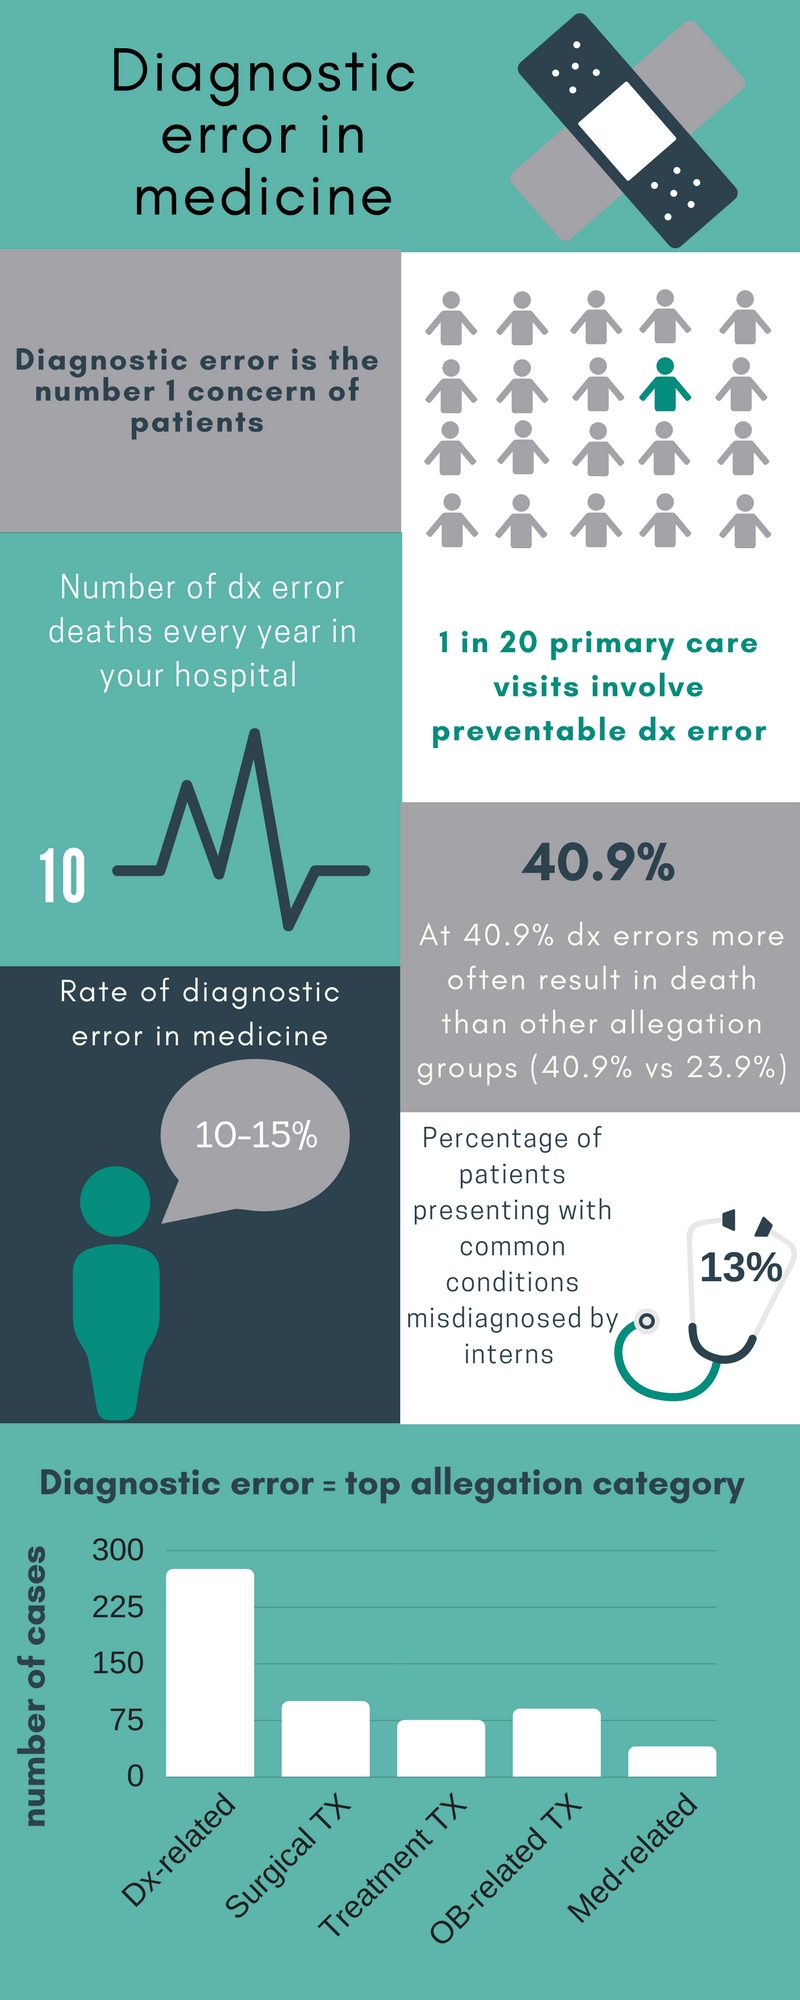 Diagnostic Error in Medicine infographic.jpg